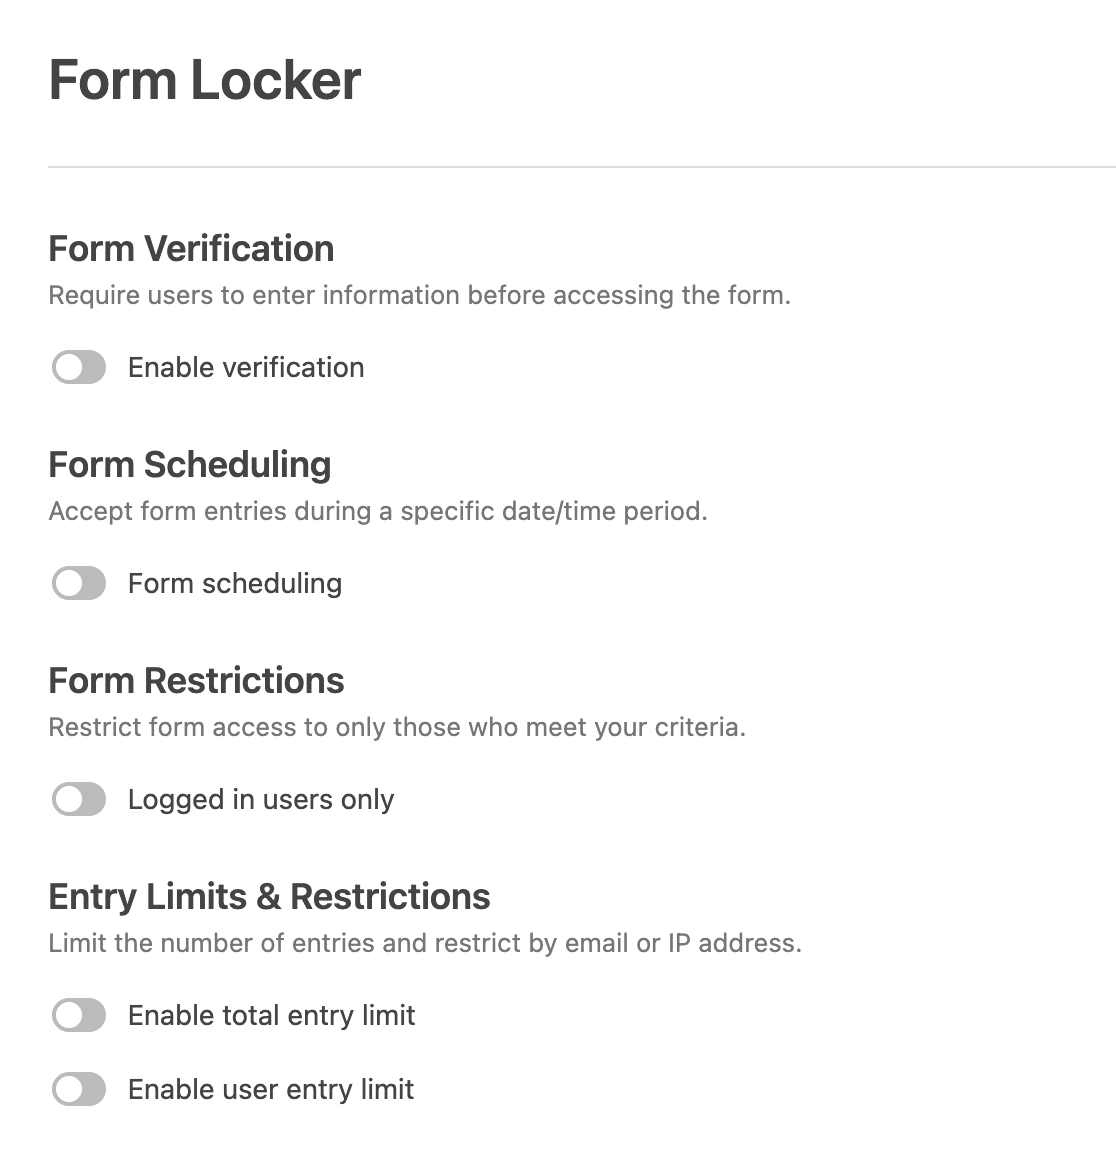 The Form Locker settings